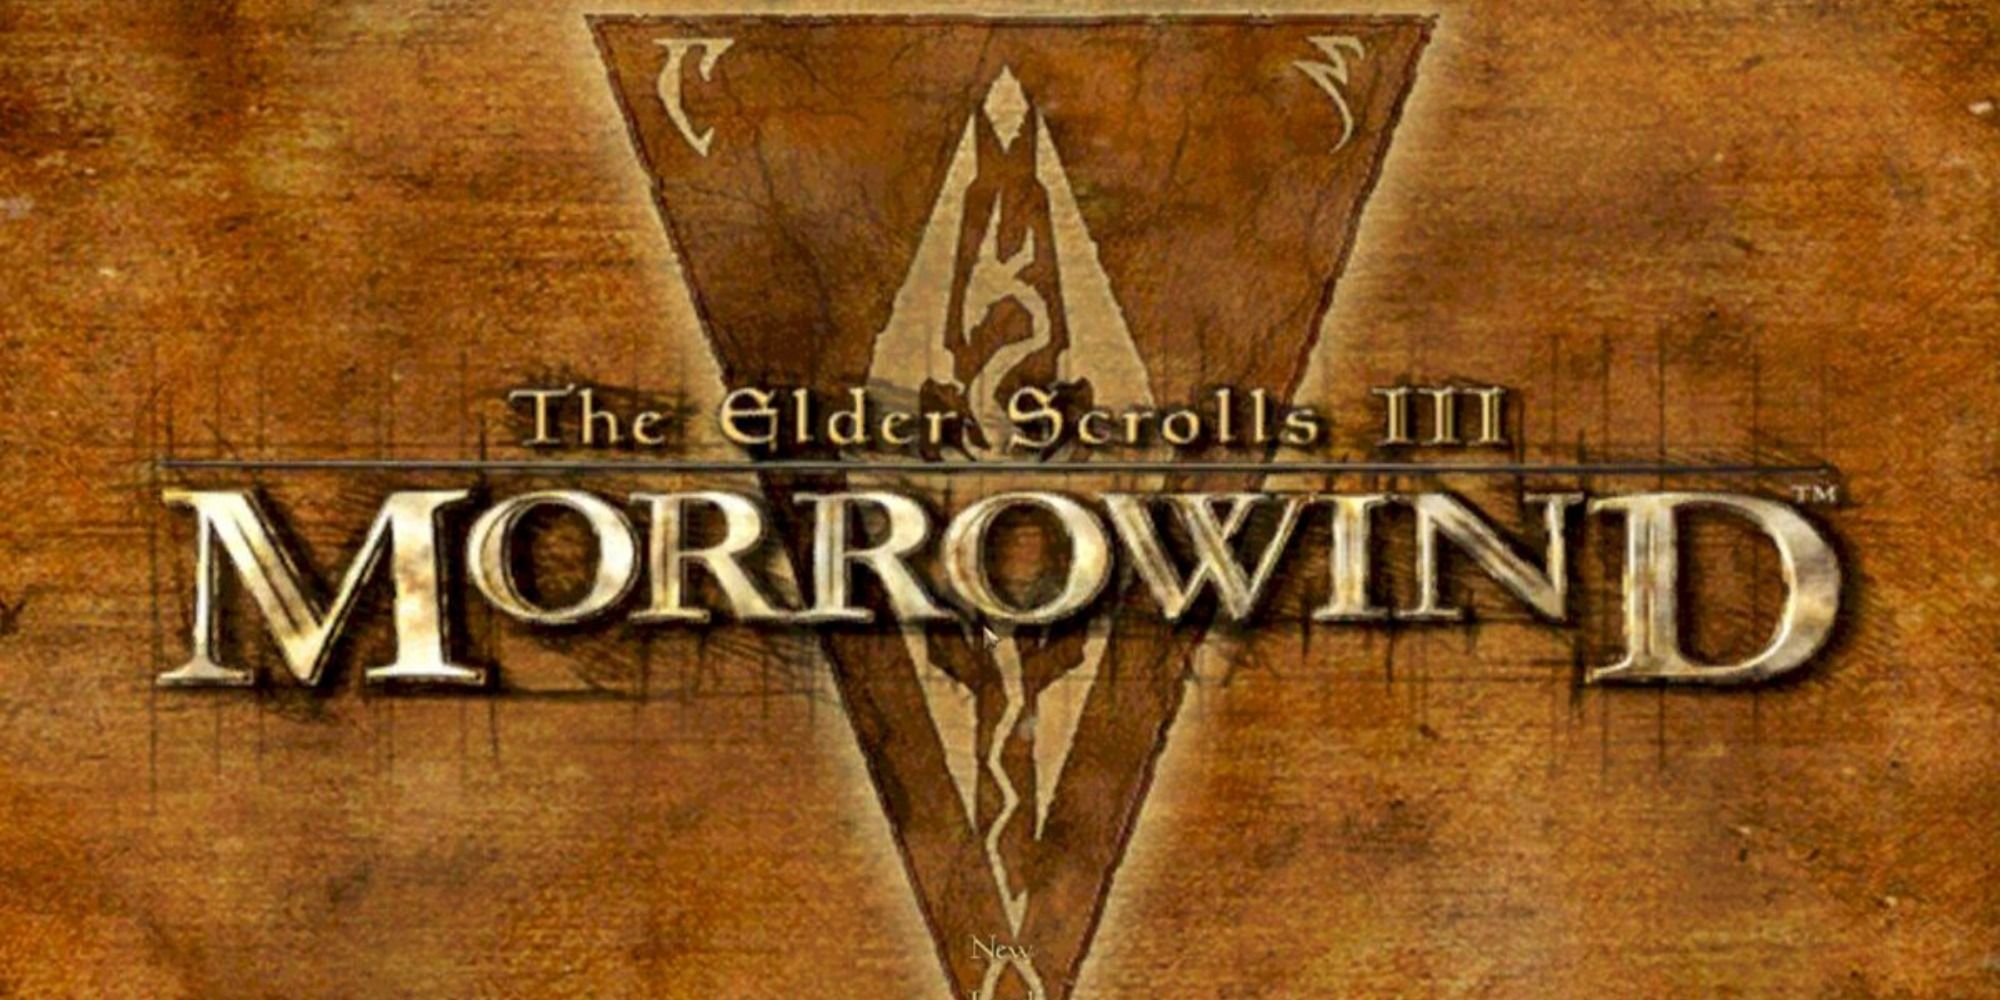 The Elder Scrolls: Morrowind Plot Summary